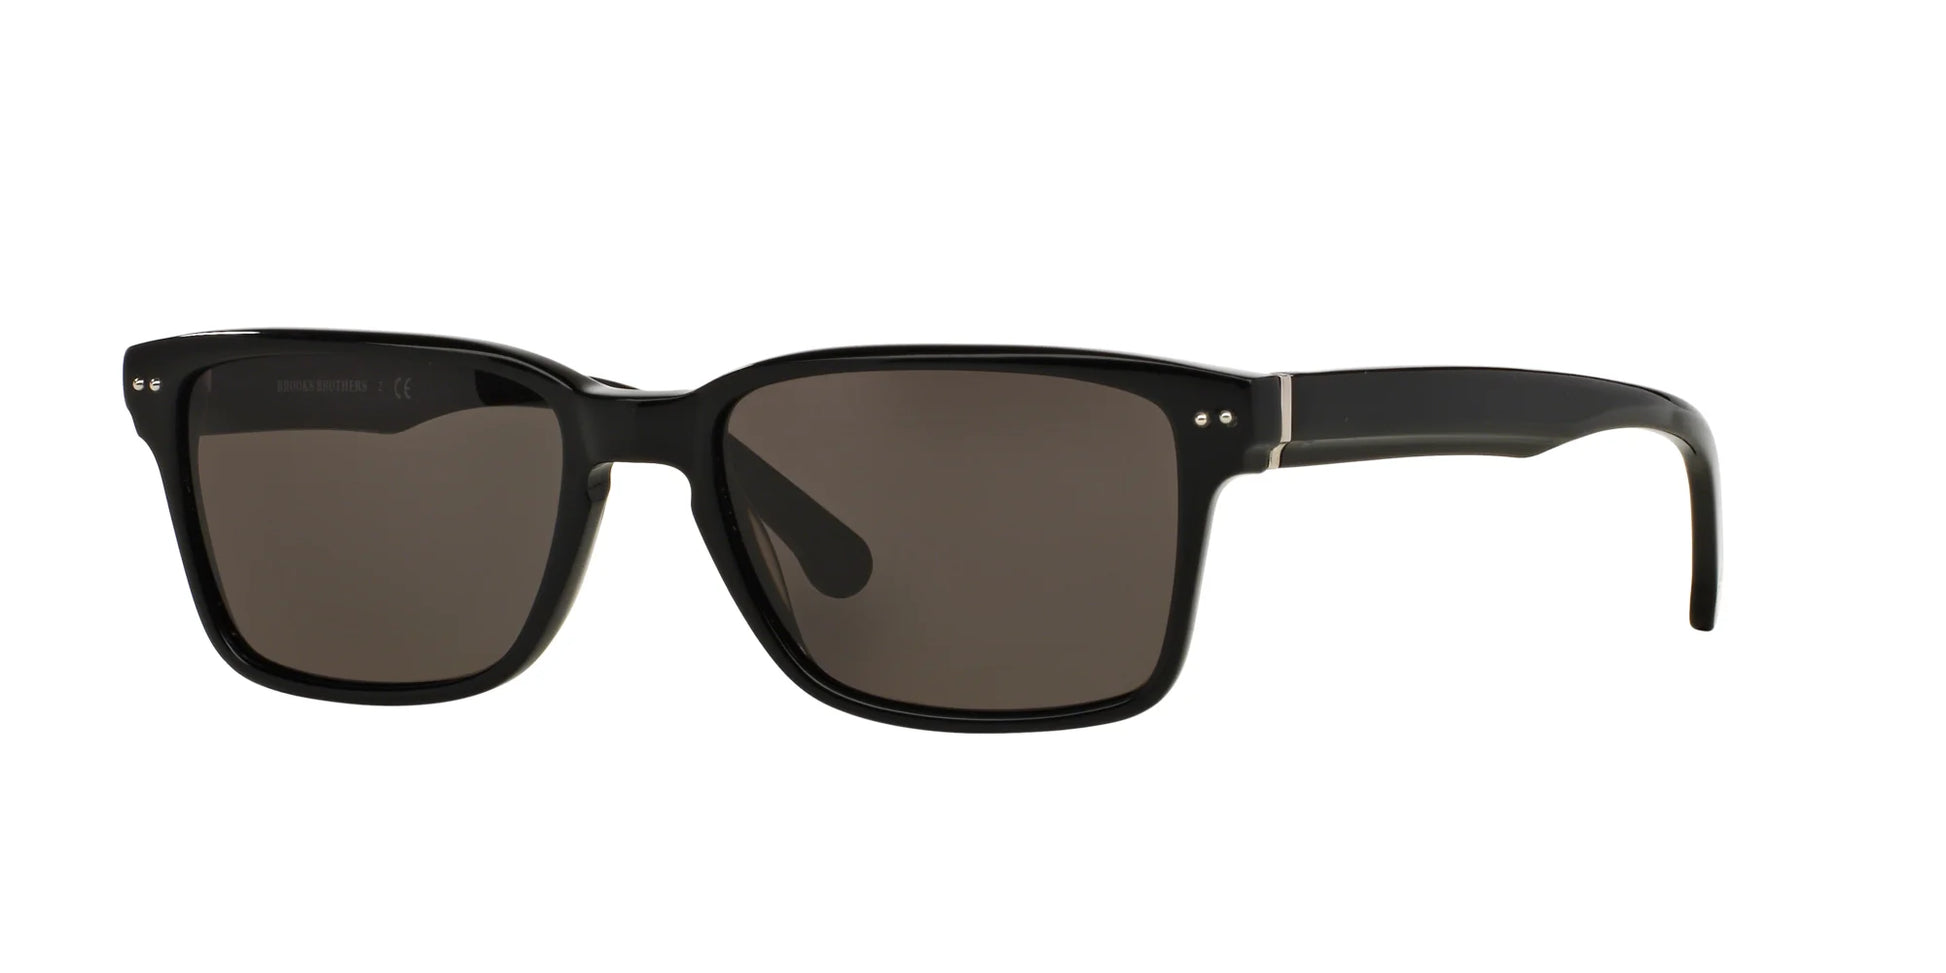 Brooks Brothers BB 725S Sunglasses Black / Gray